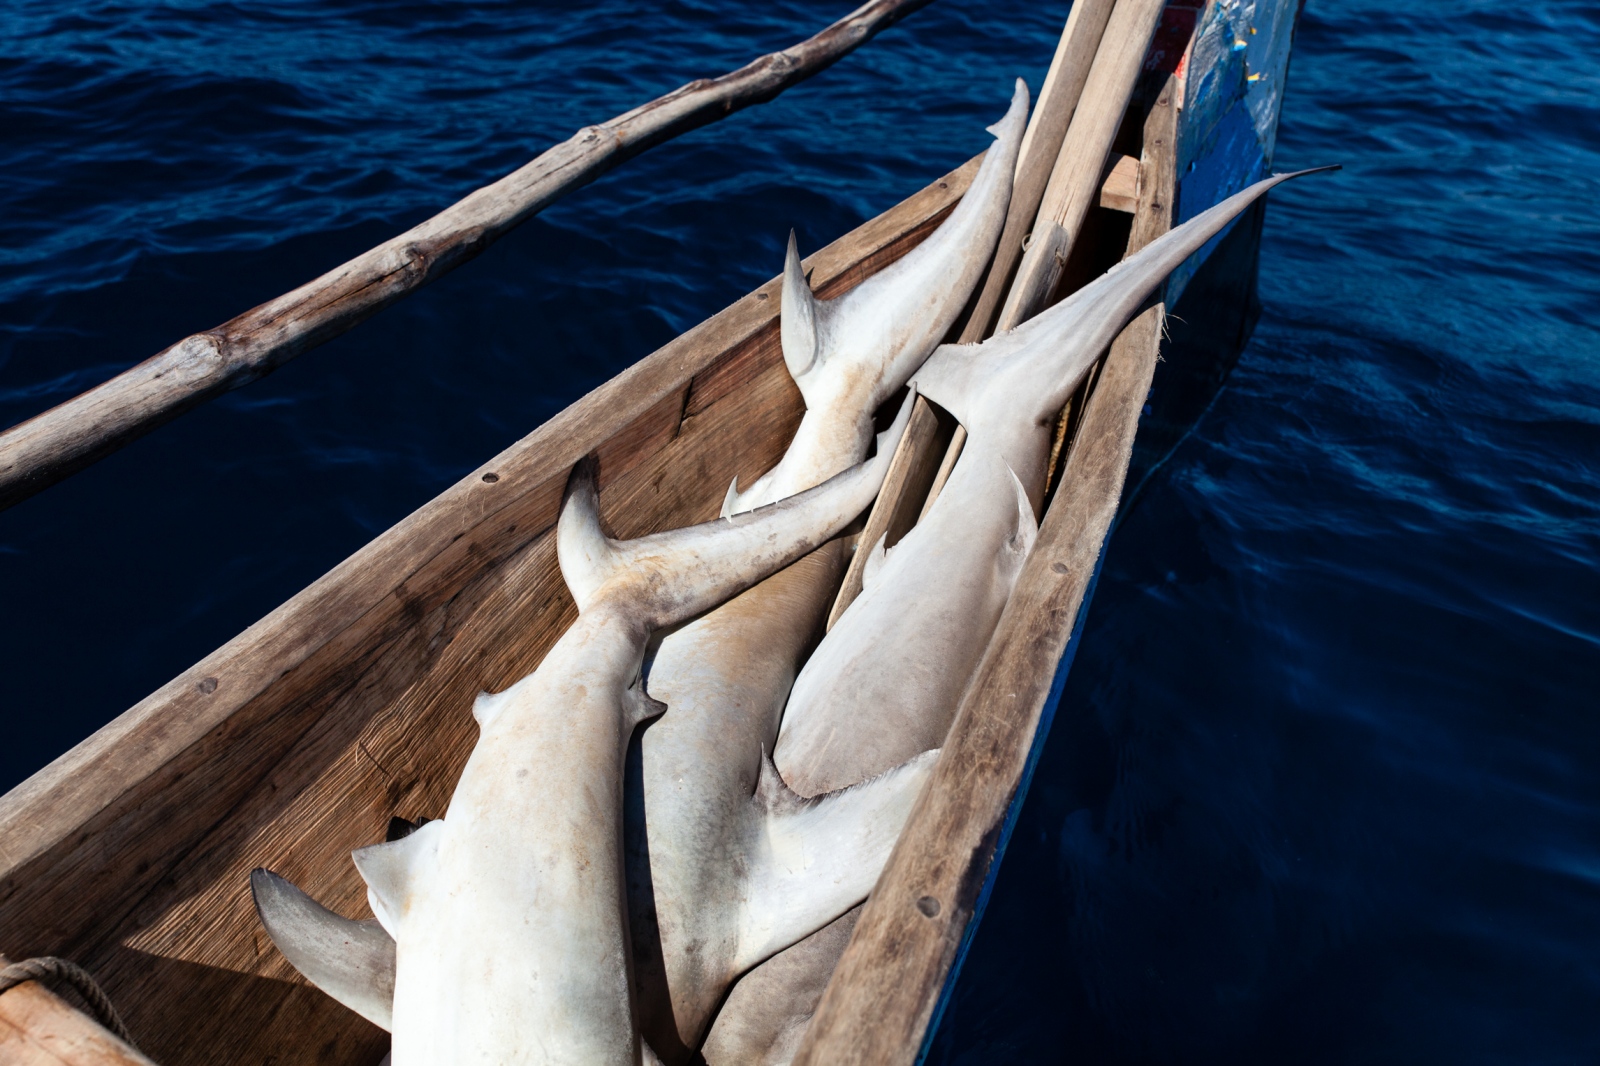 Traditional shark fishing